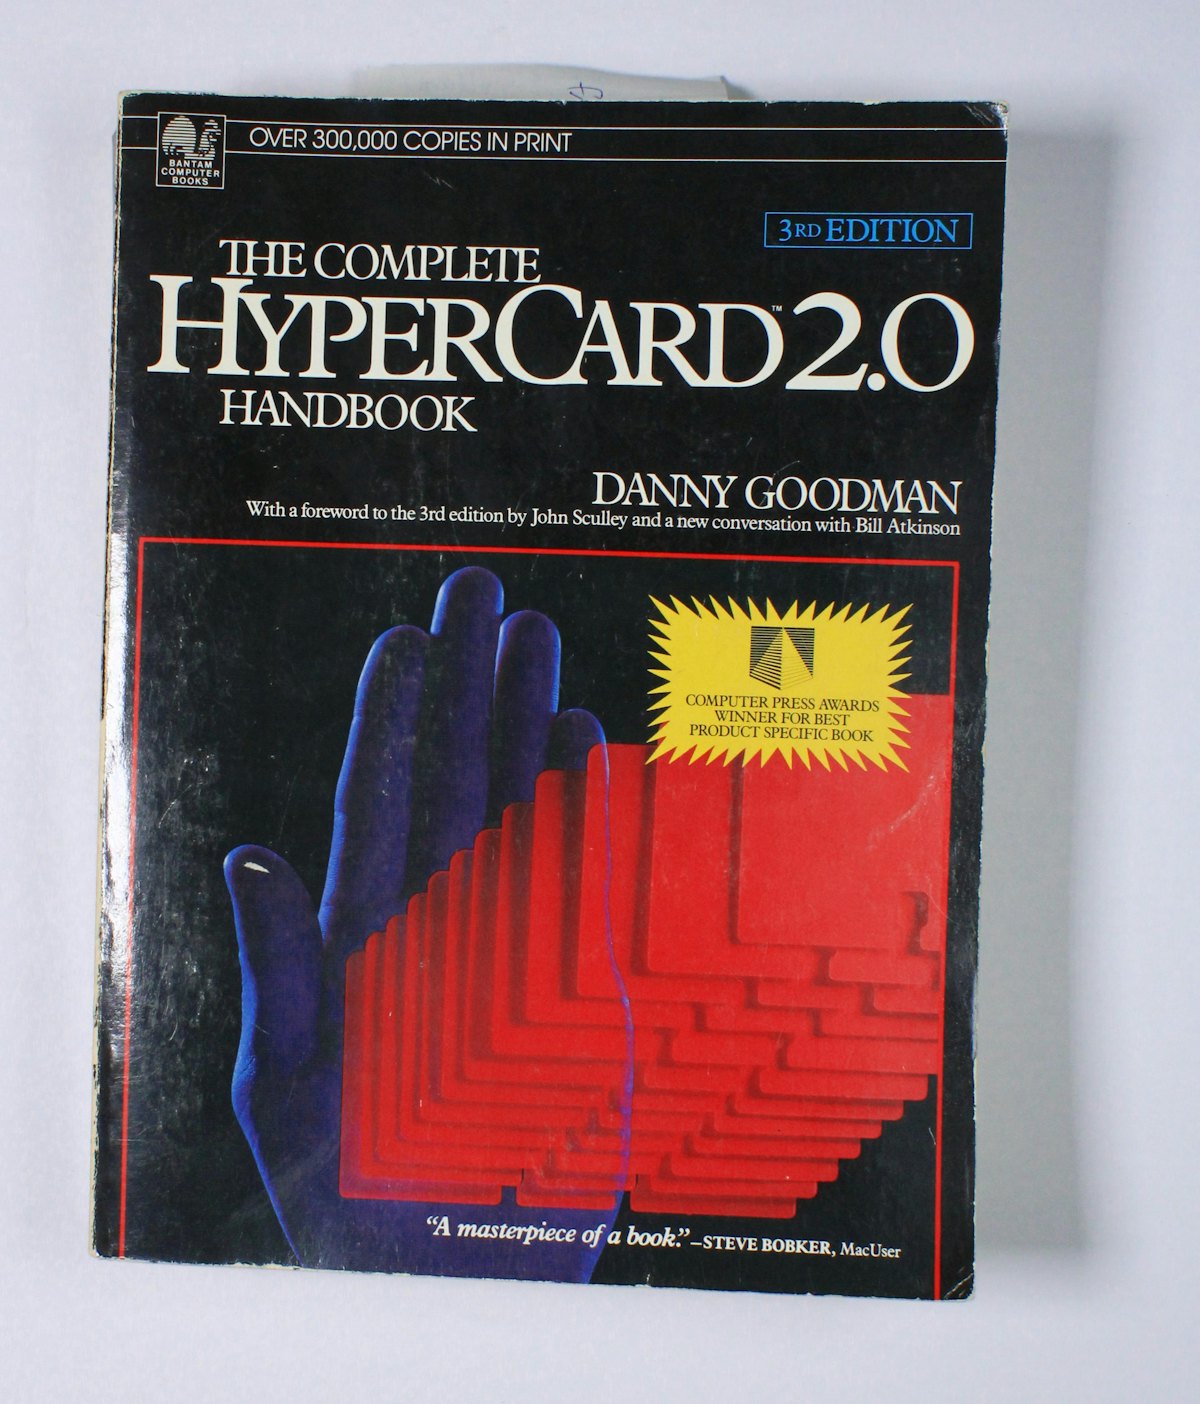 The Complete HyperCard 2.0 Handbook